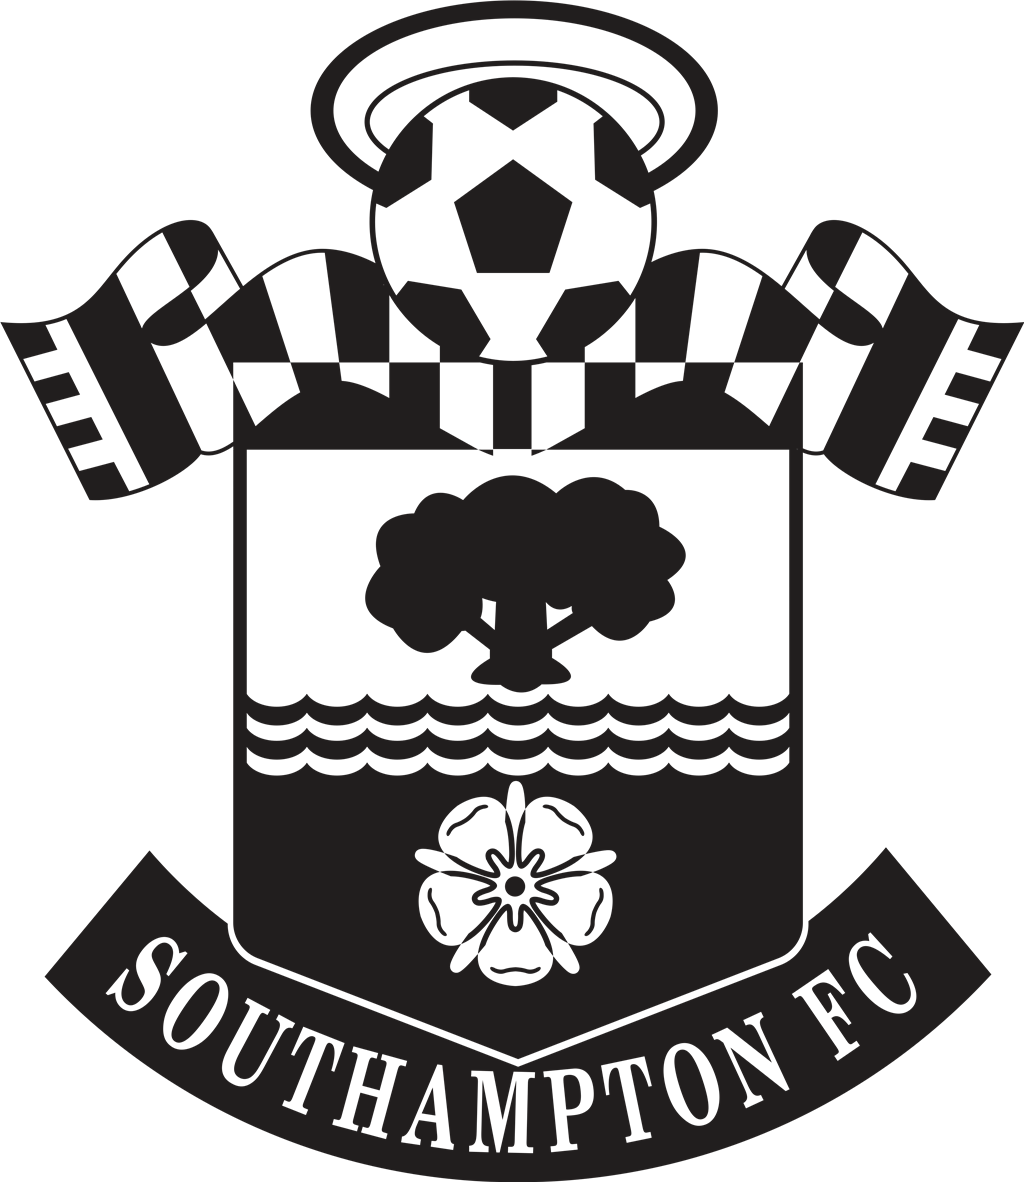 Southampton FC logotype, transparent .png, medium, large